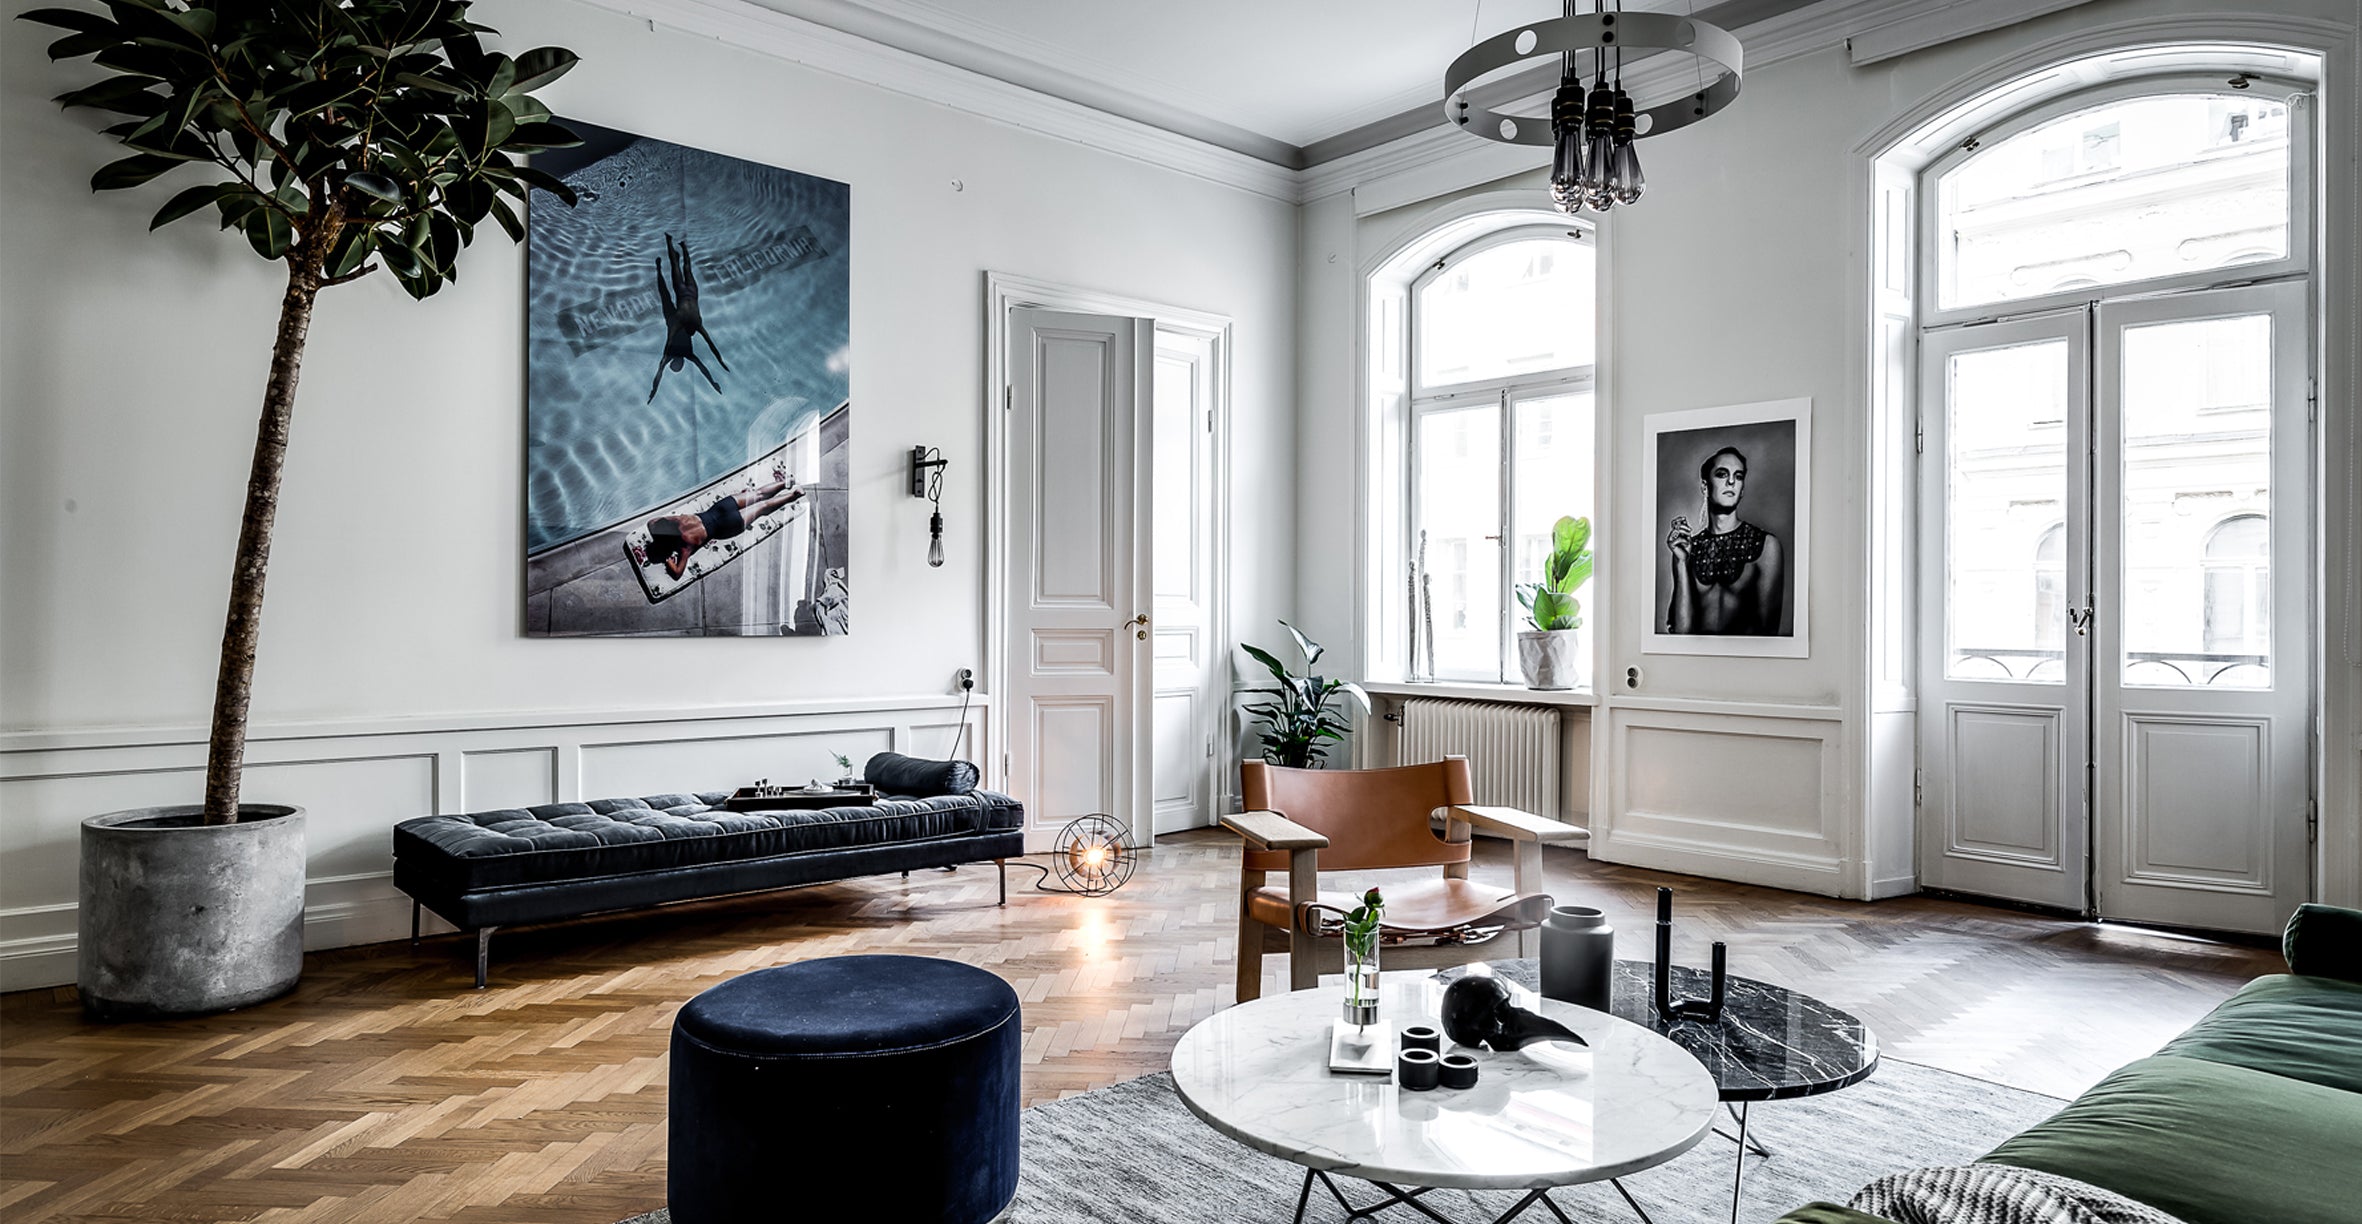 FENCY & SPOOL styled by Swedish interior guru Henrik Nero